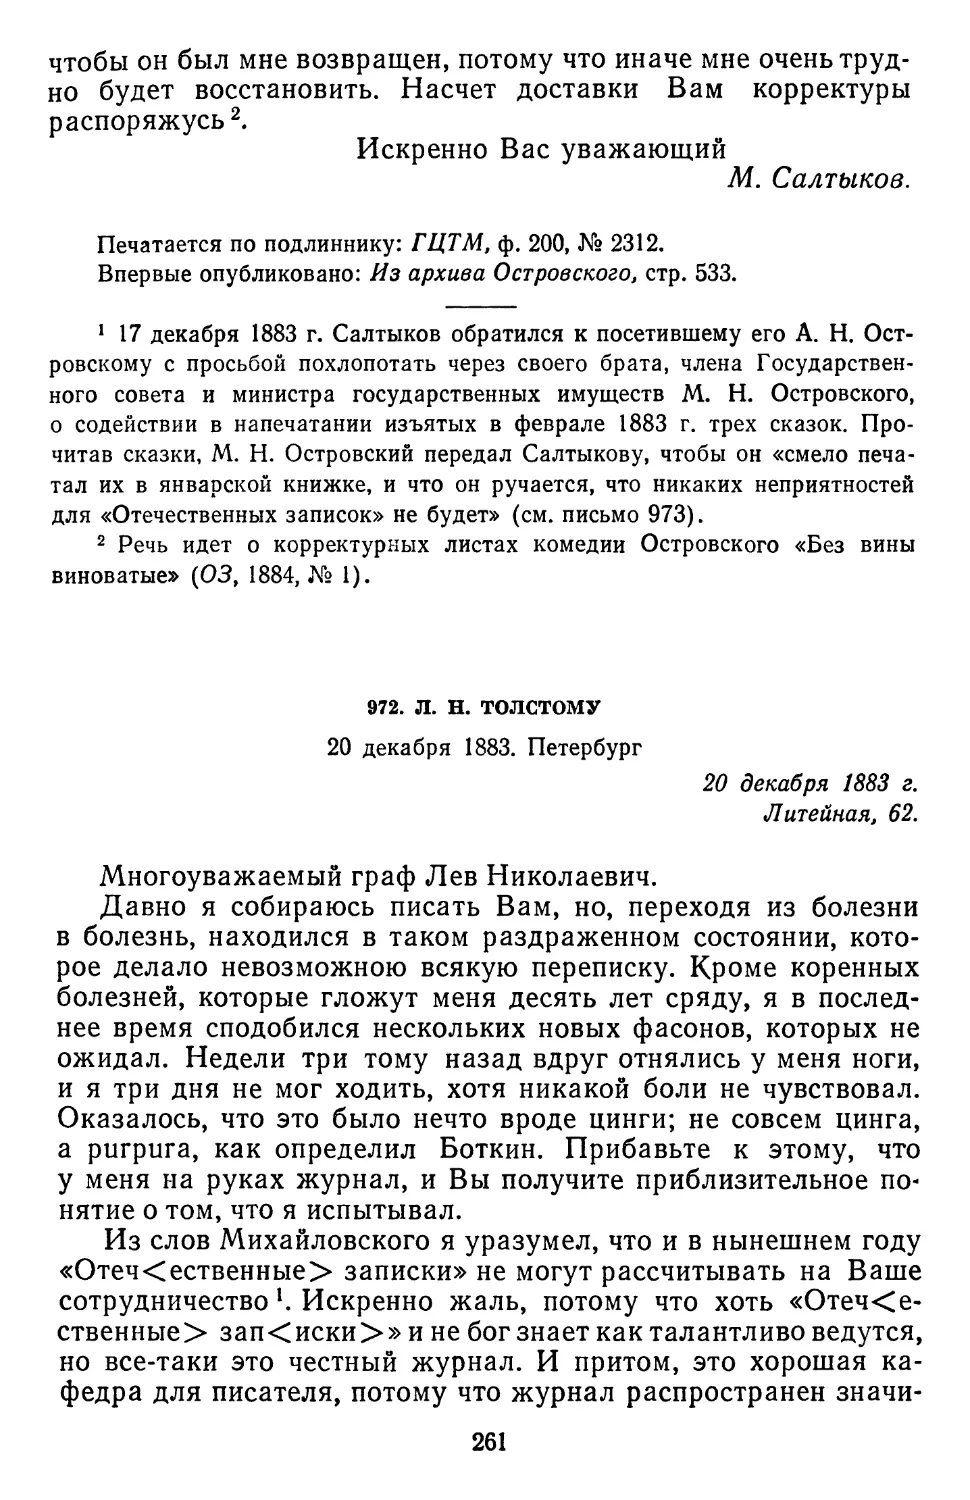 972.Л.Н.Толстому. 20 декабря 1883. Петербург